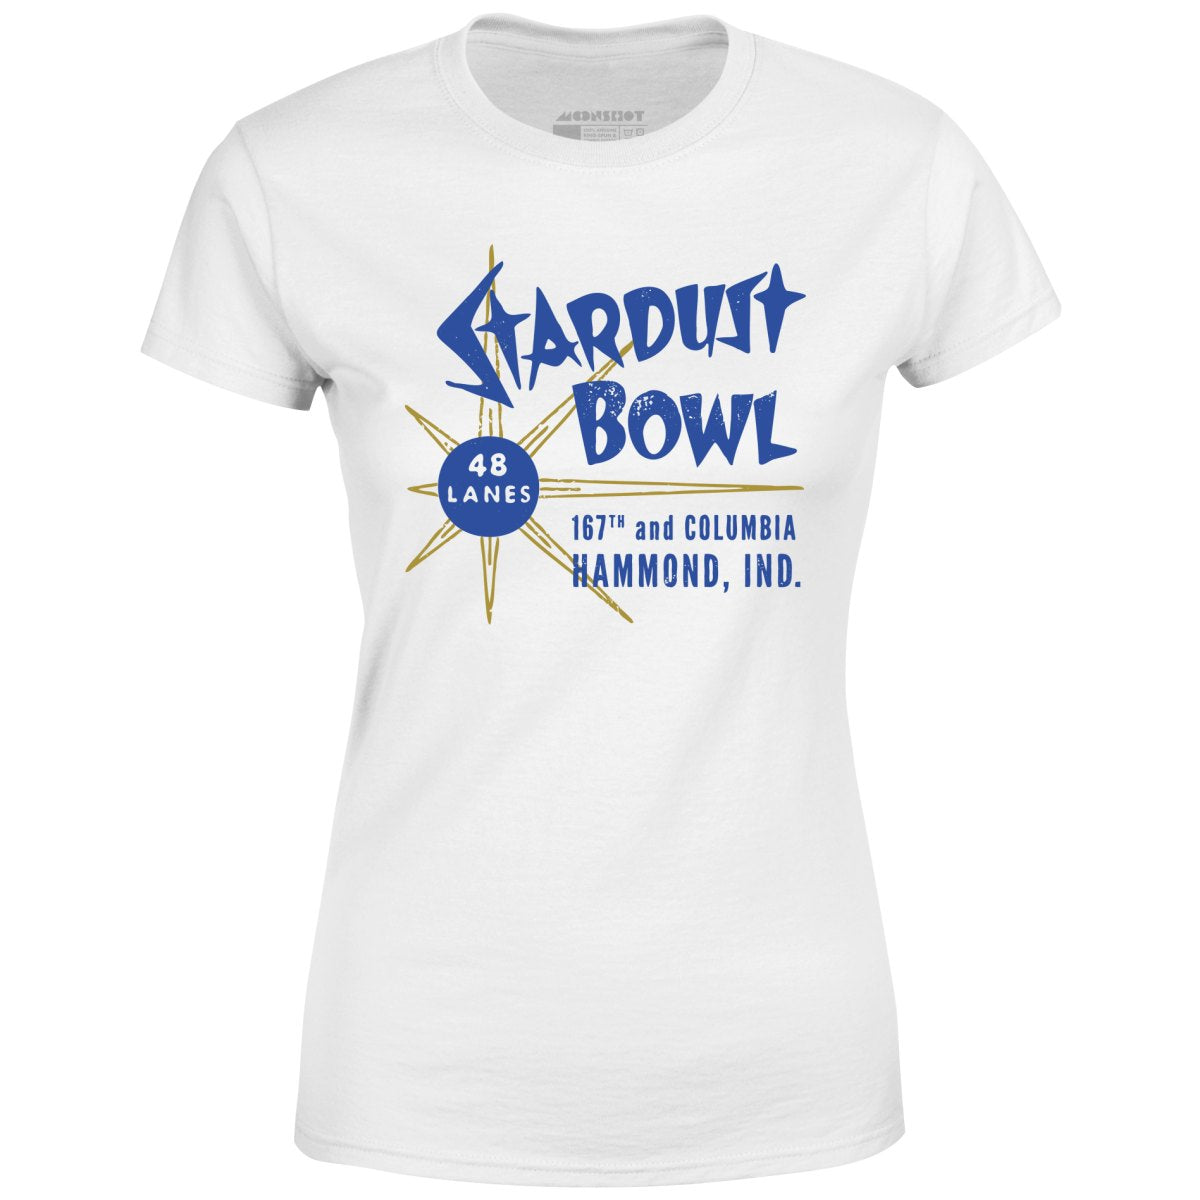 Stardust Bowl - Hammond, IN - Vintage Bowling Alley - Women's T-Shirt